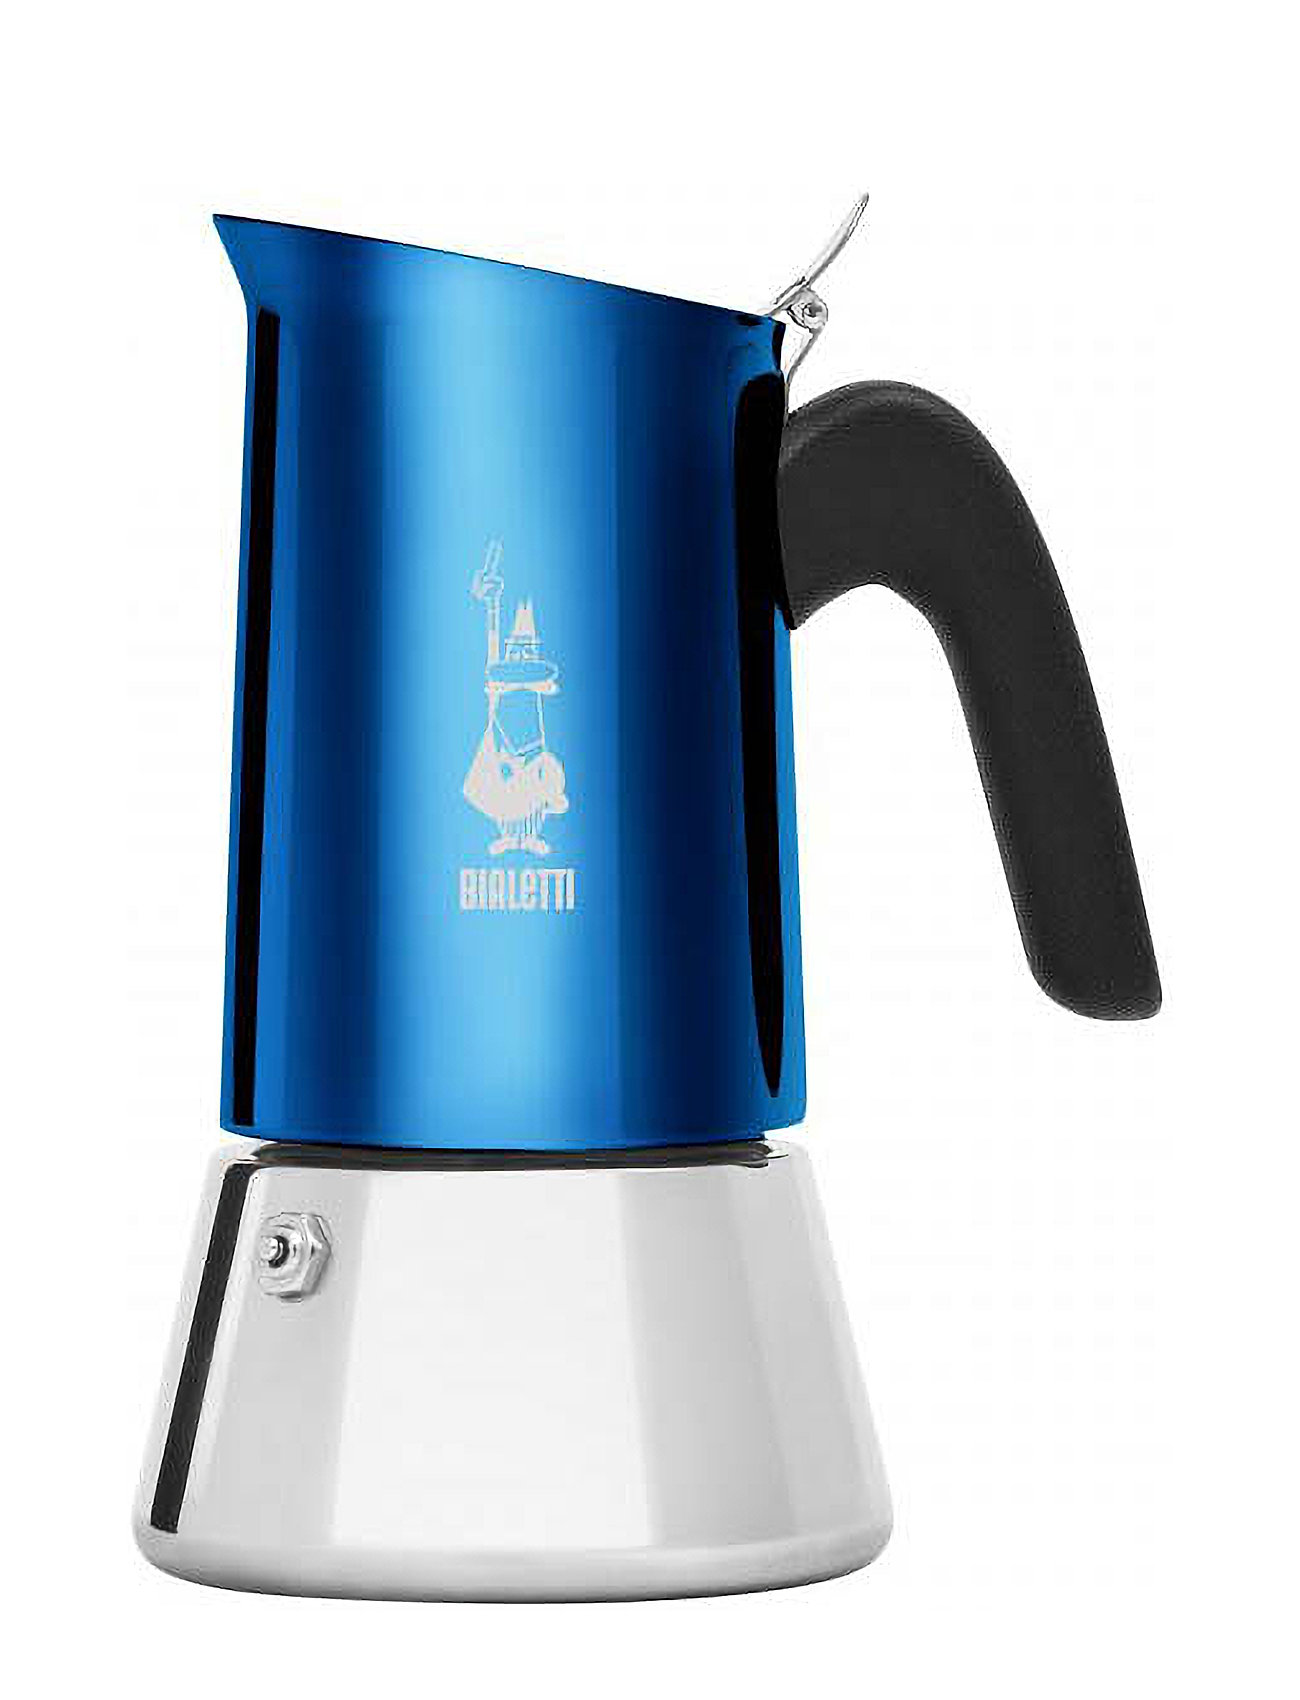 New Venus Colour Home Kitchen Kitchen Appliances Coffee Makers Moka Pots Blue Bialetti